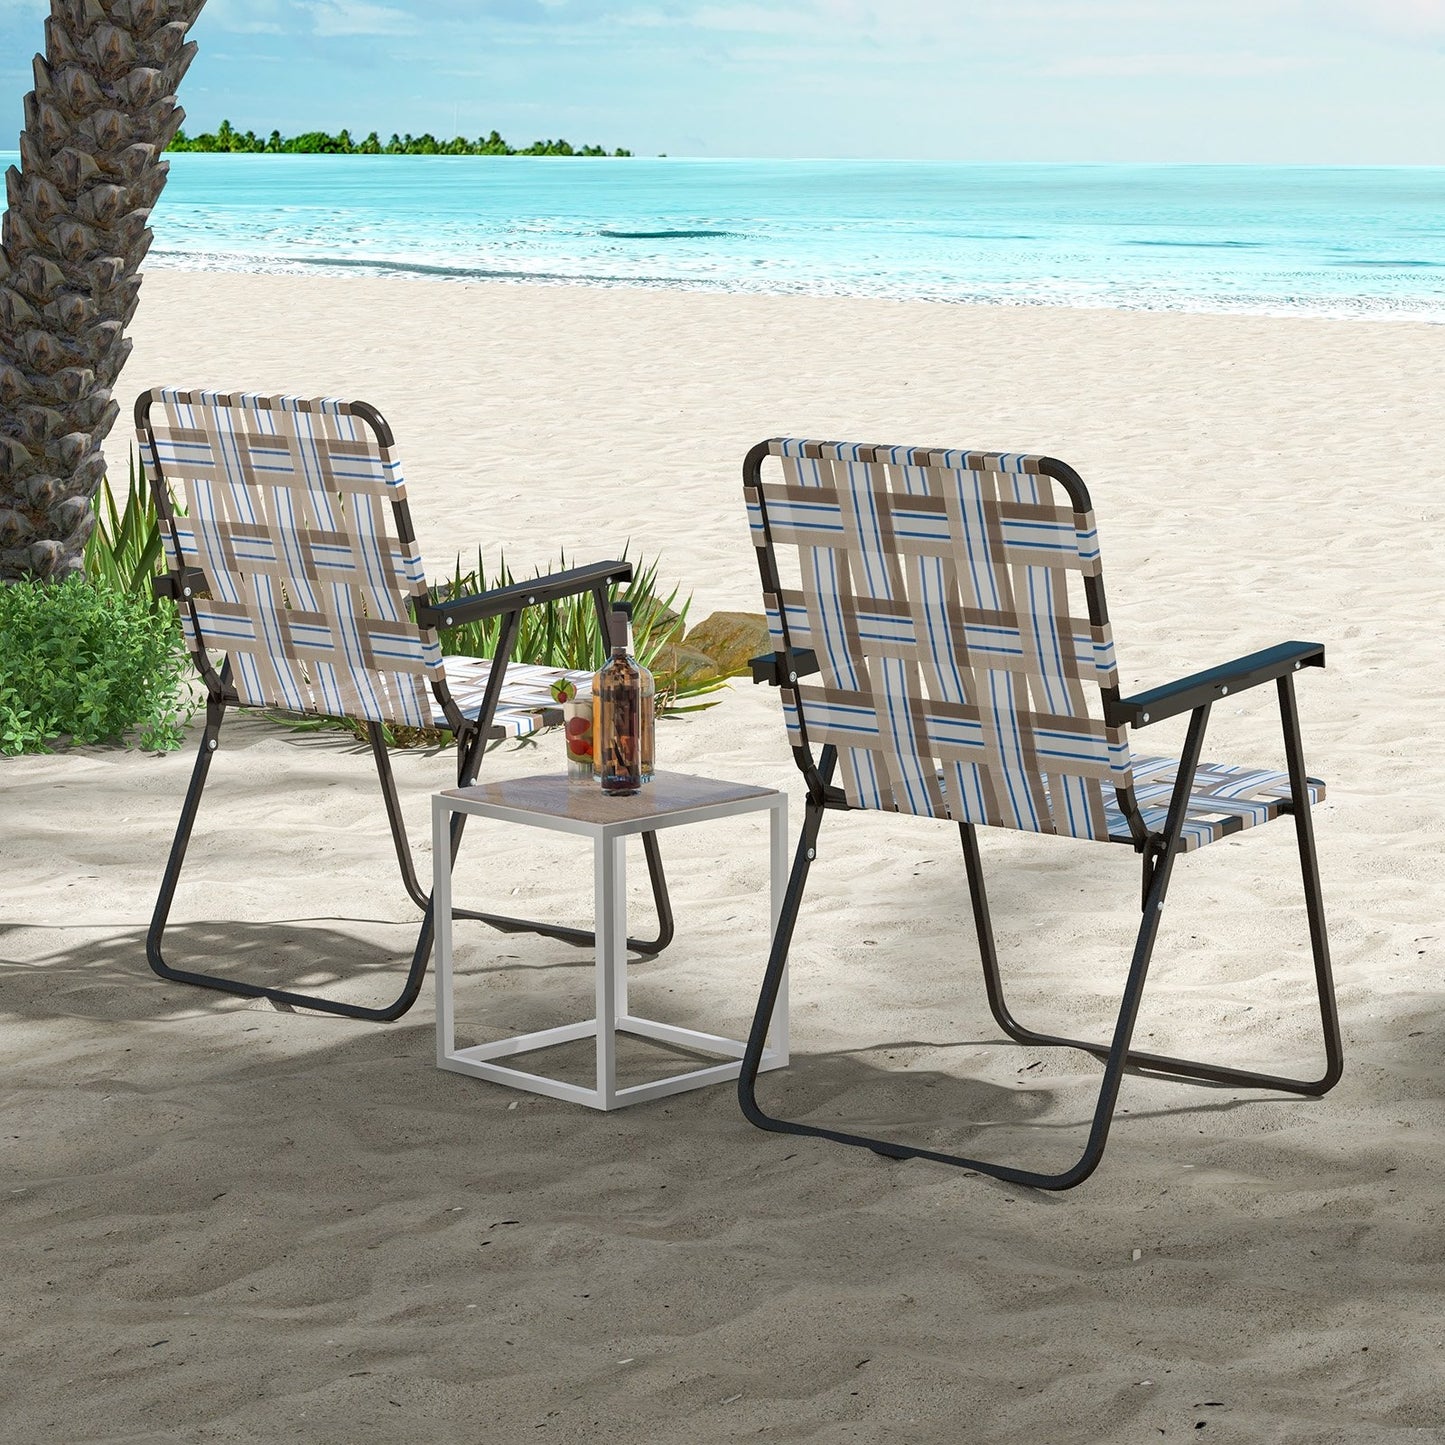 4 Pieces Folding Beach Chair Camping Lawn Webbing Chair, Coffee